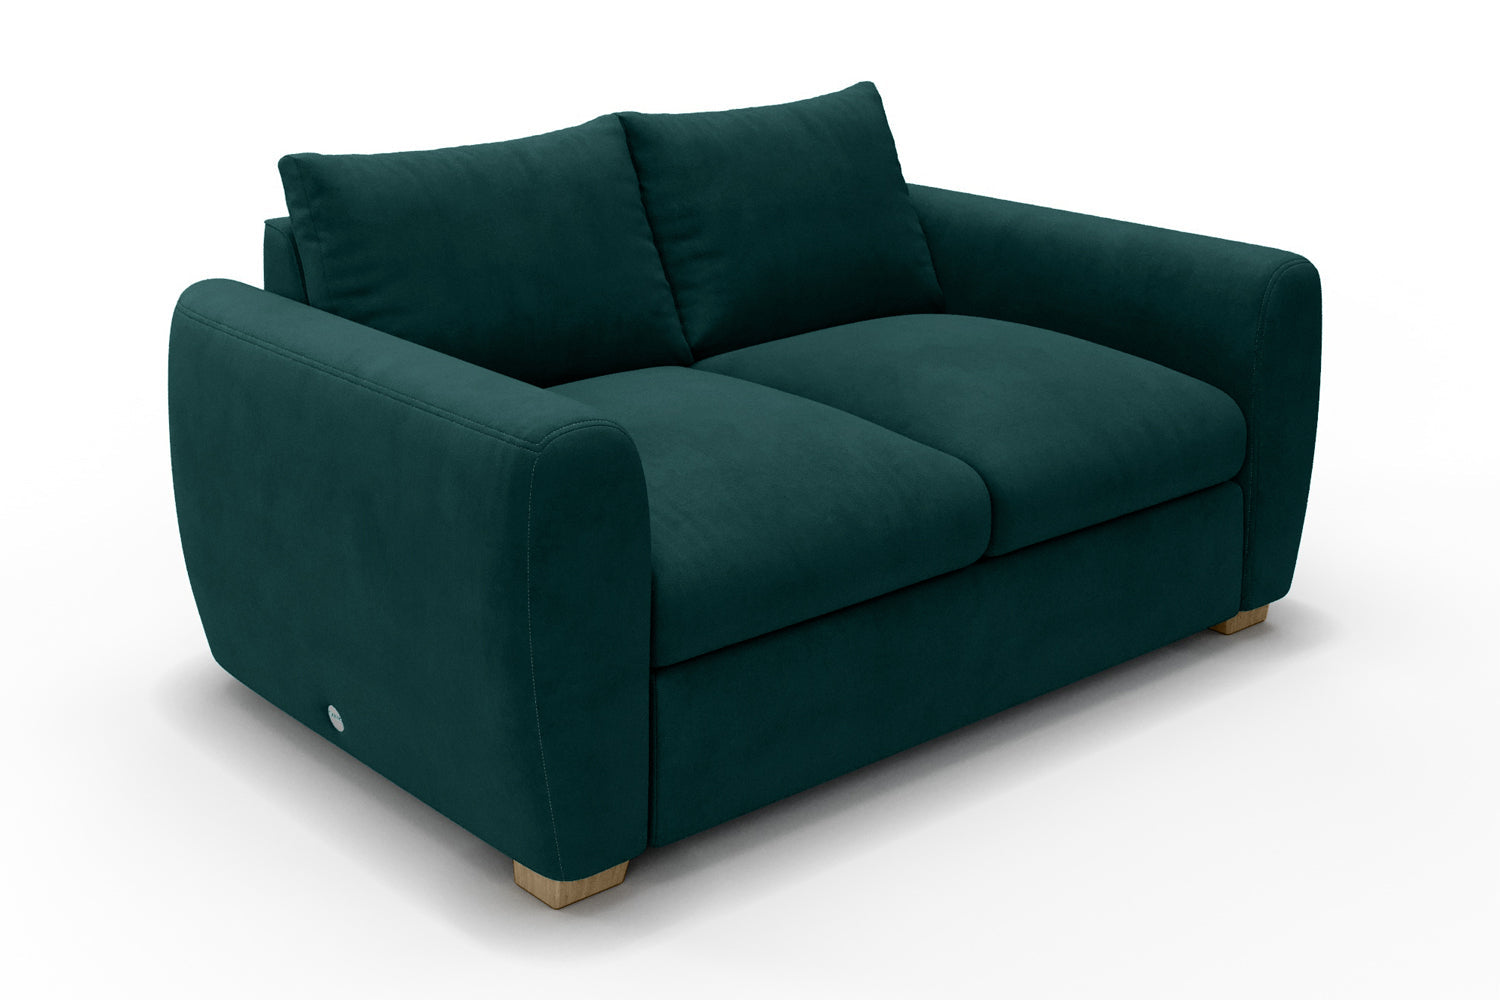 SNUG | The Cloud Sundae 2 Seater Sofa in Pine Green